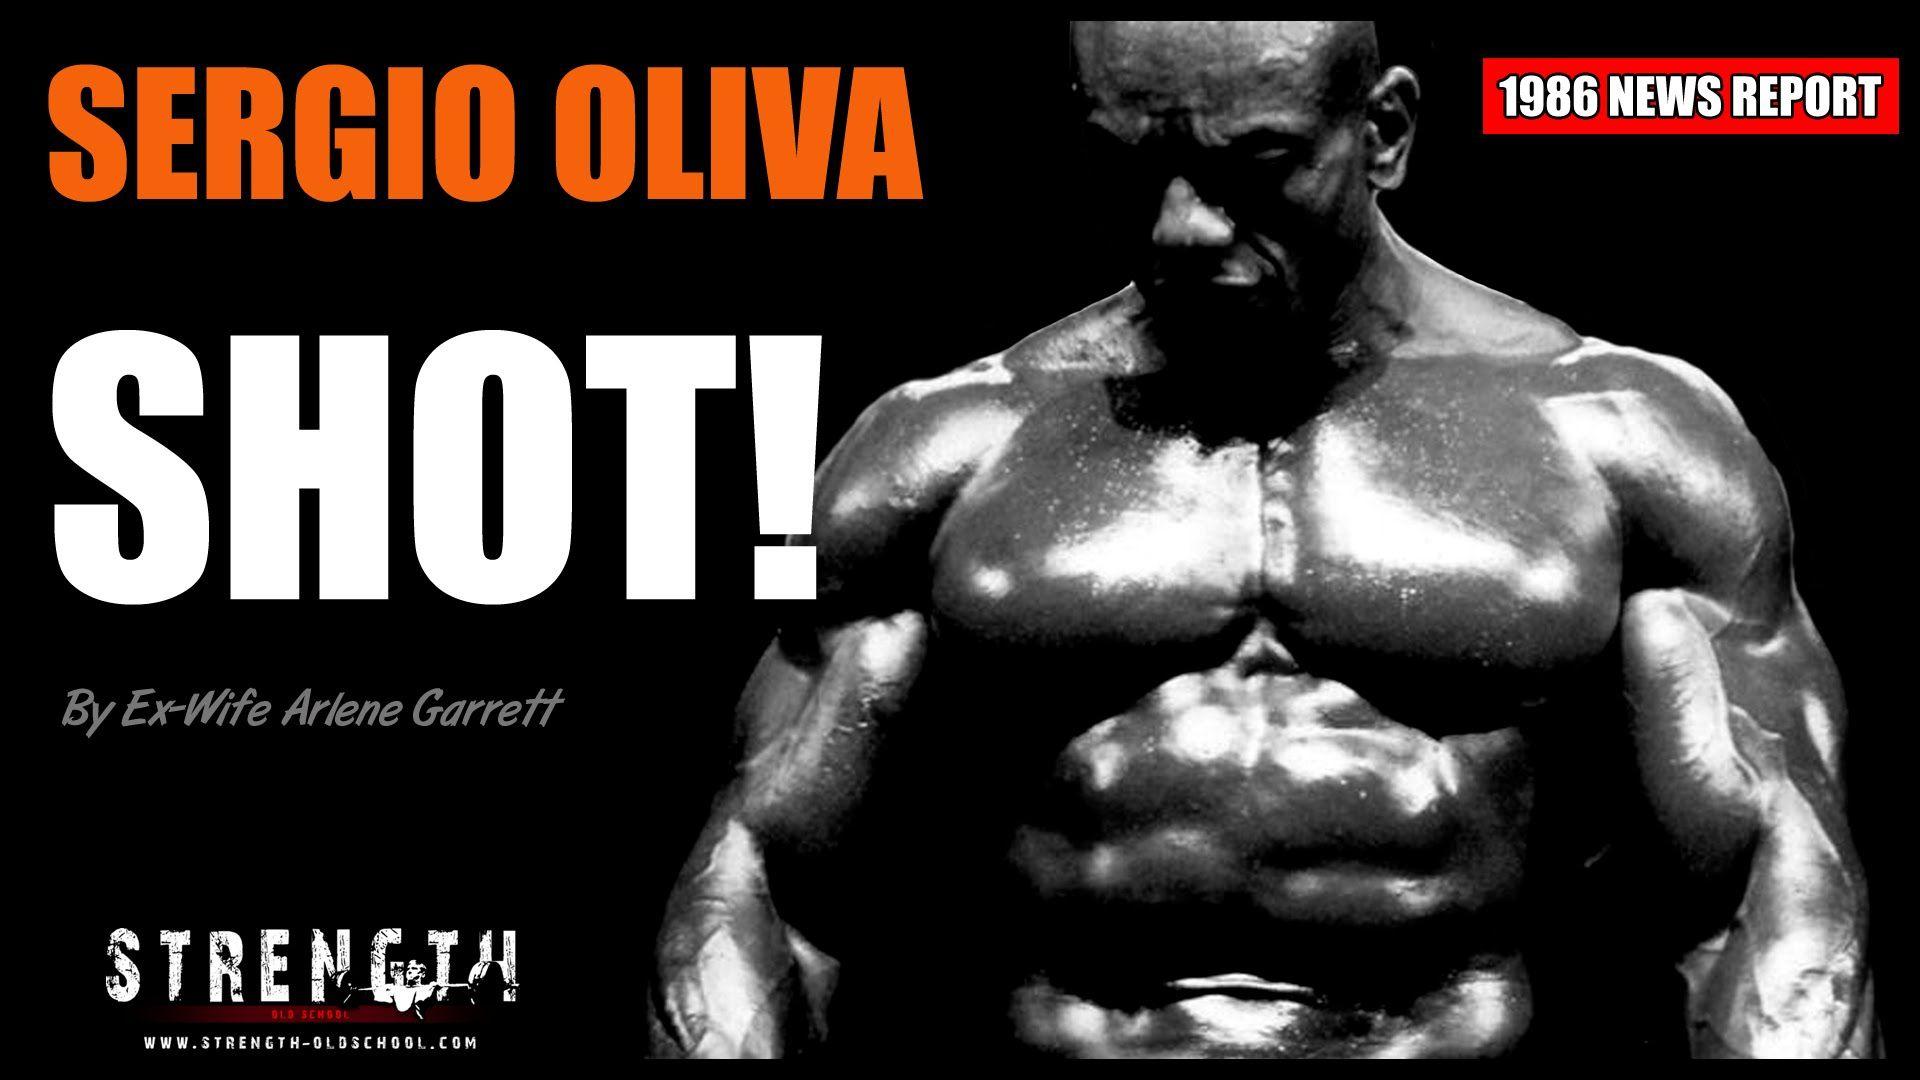 Bodybuilding Legend Sergio Oliva Shot